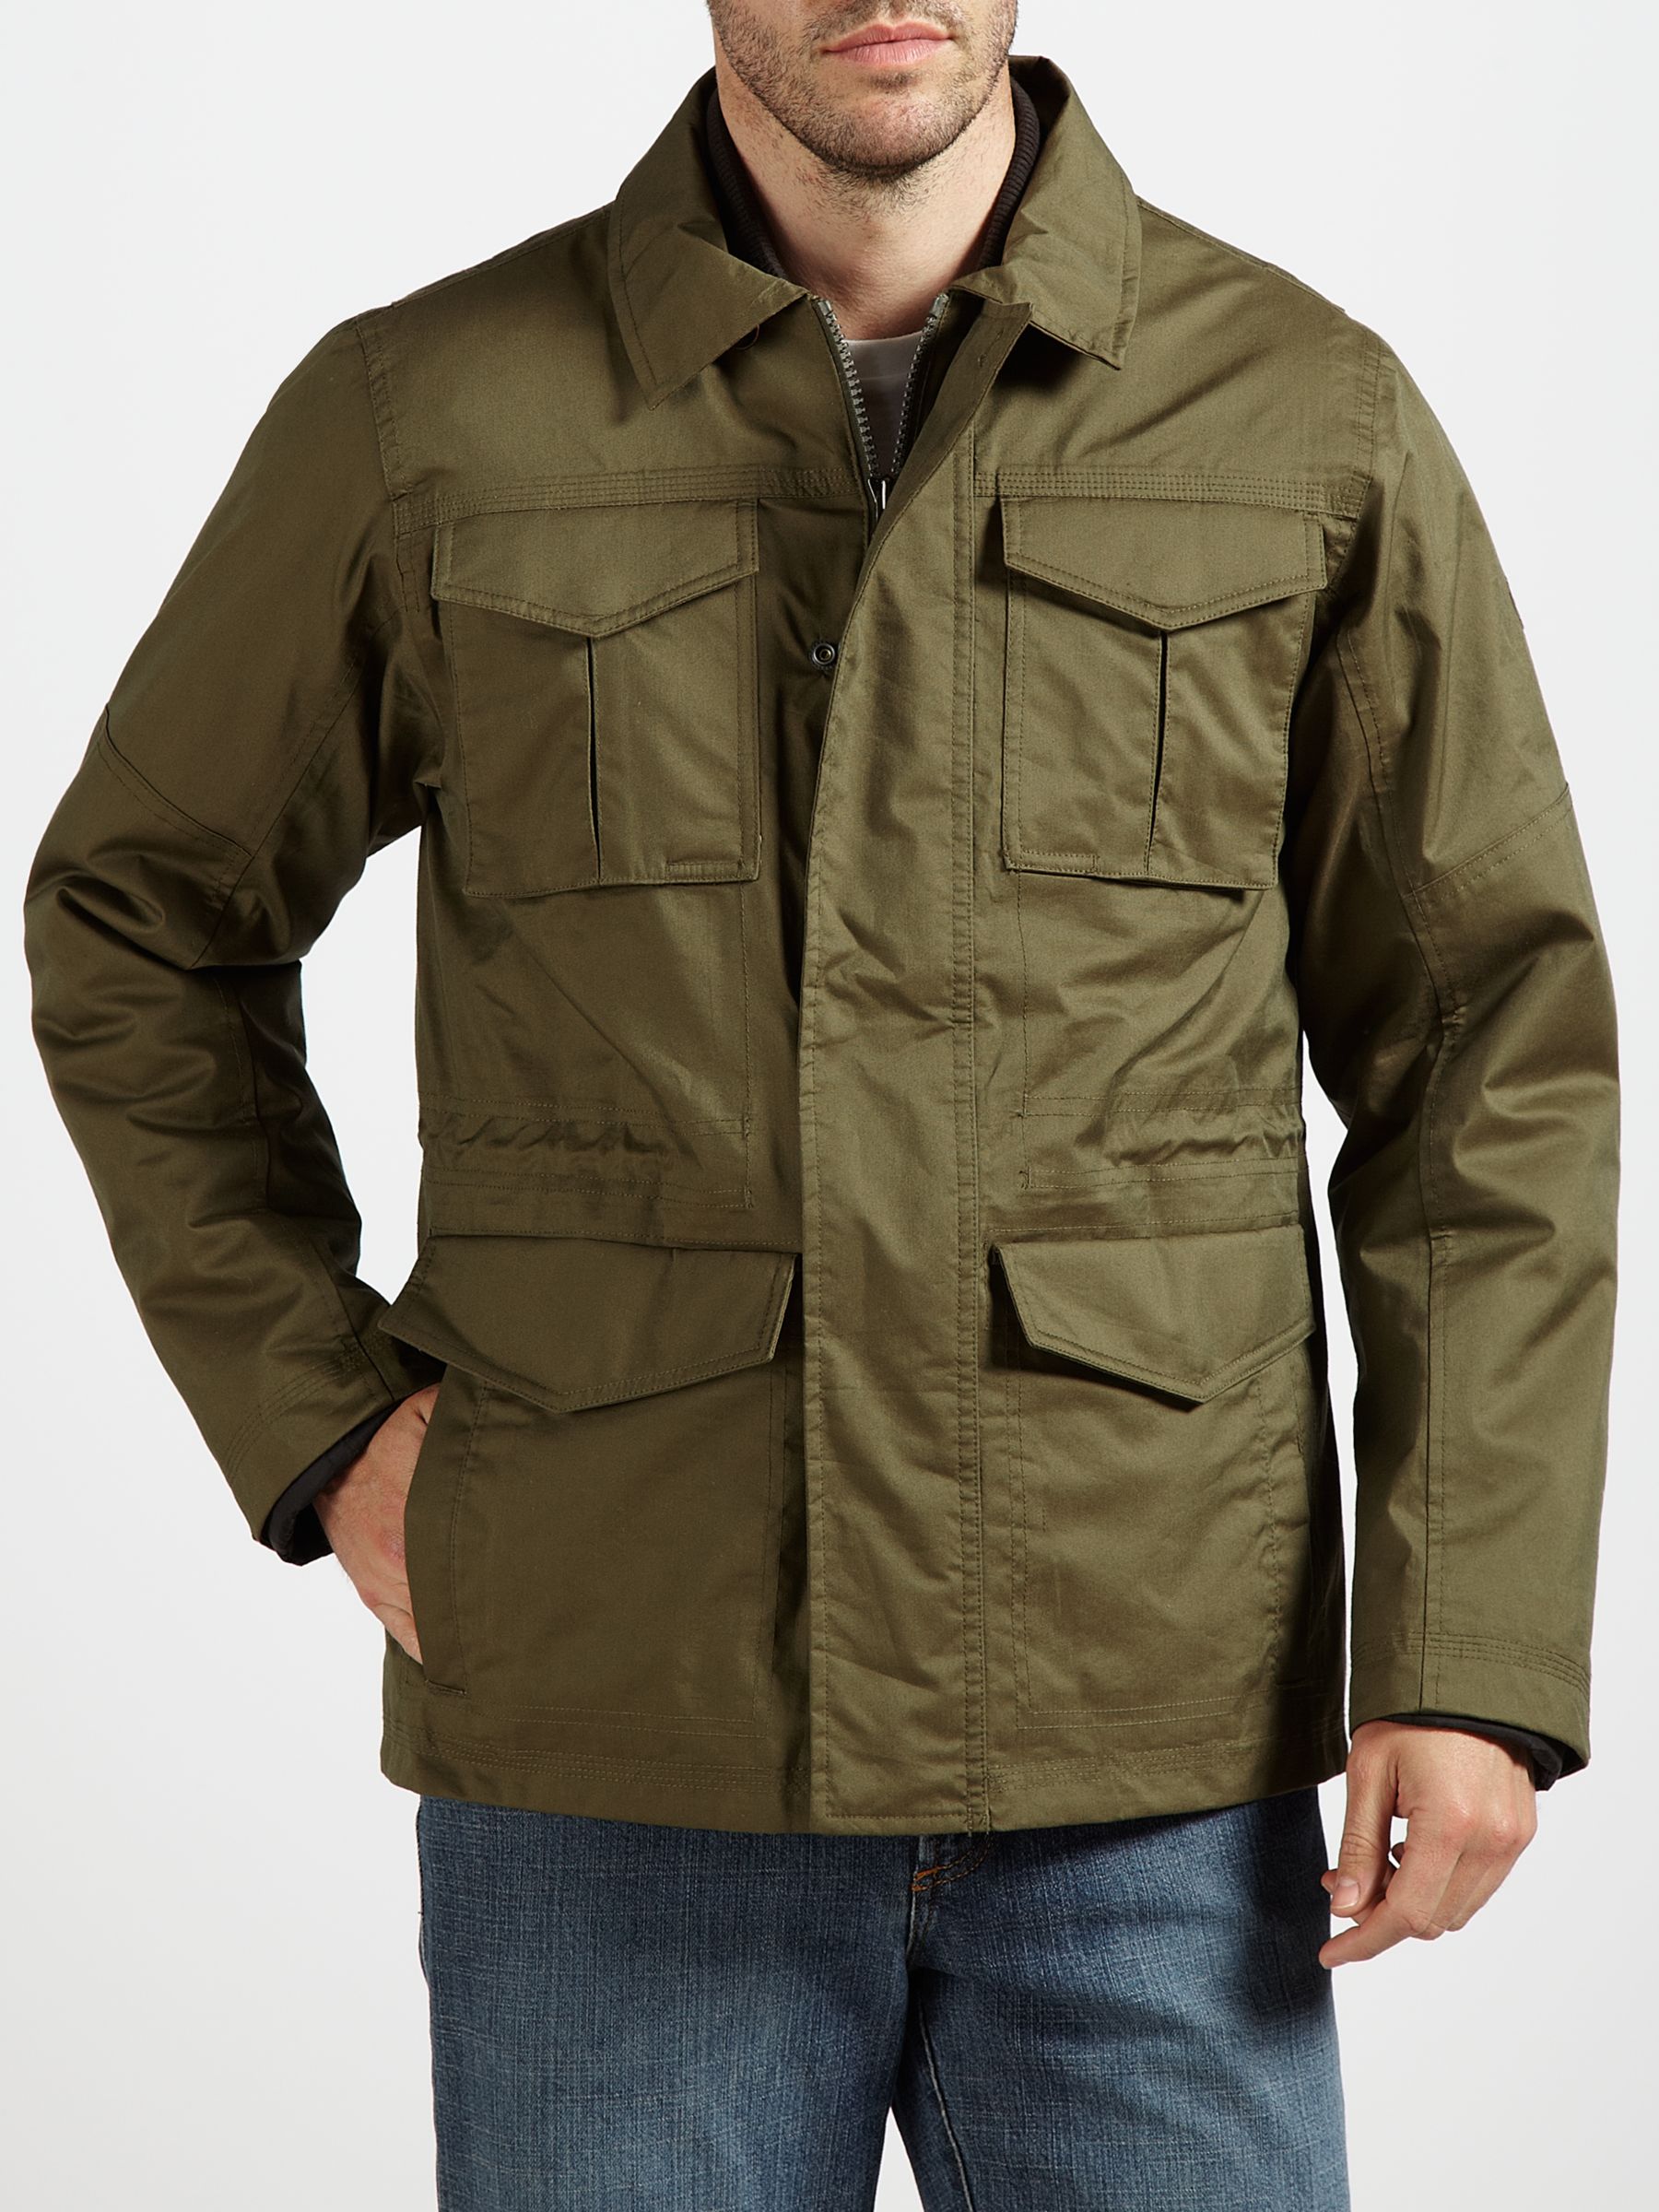 timberland abington jacket